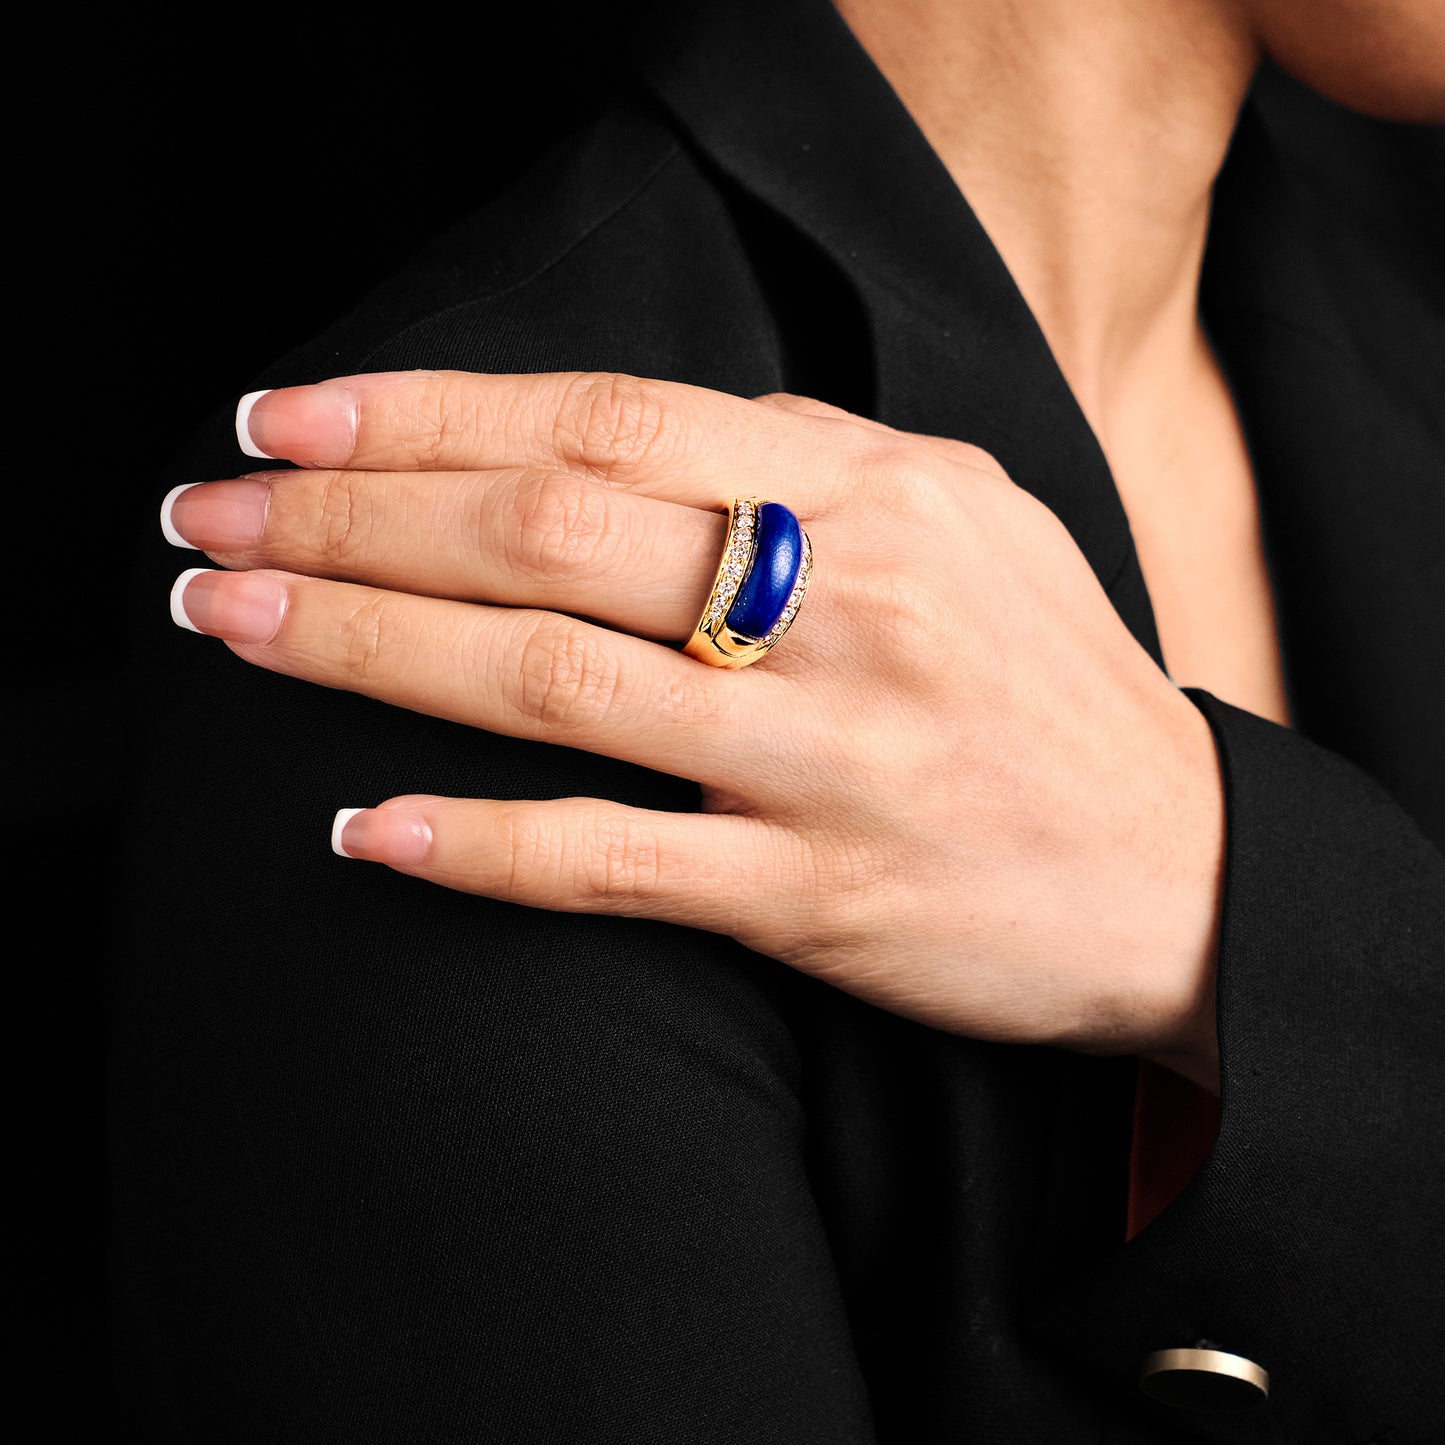 Van Cleef & Arpels Lapis Lazuli Ring